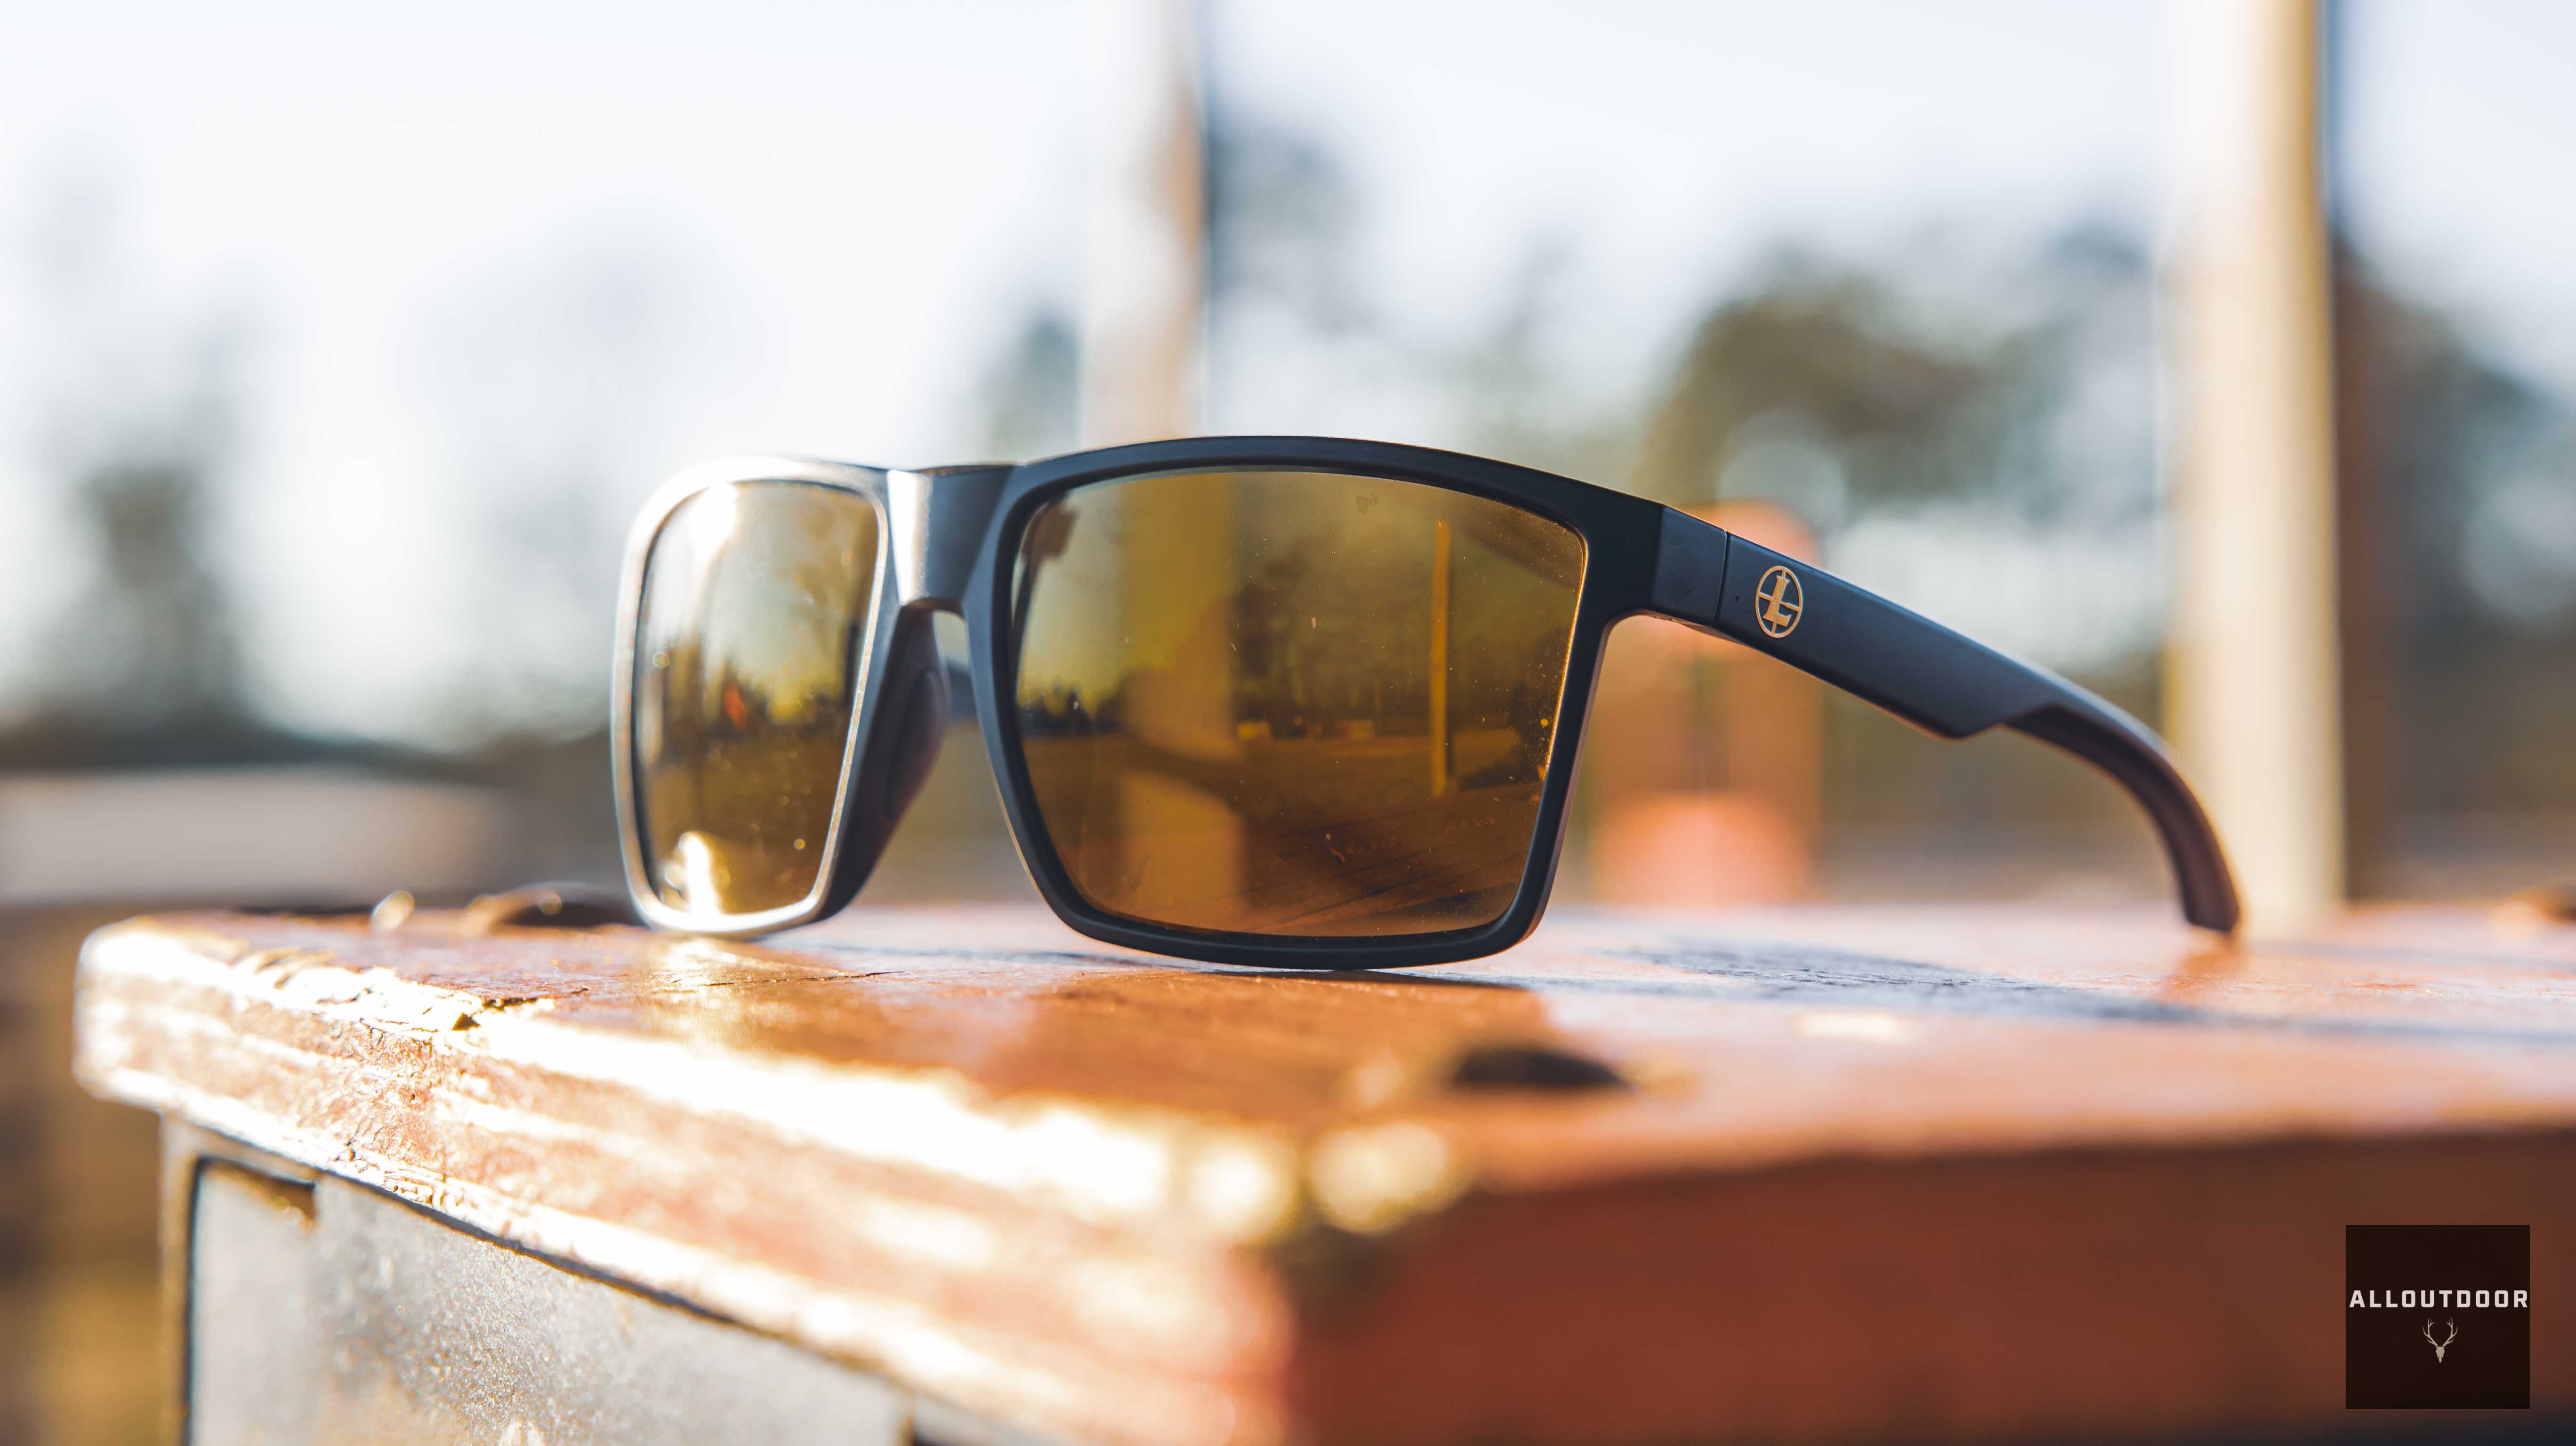 AllOutdoor Review: Leupold DeSoto Sunglasses - Performance Eyewear